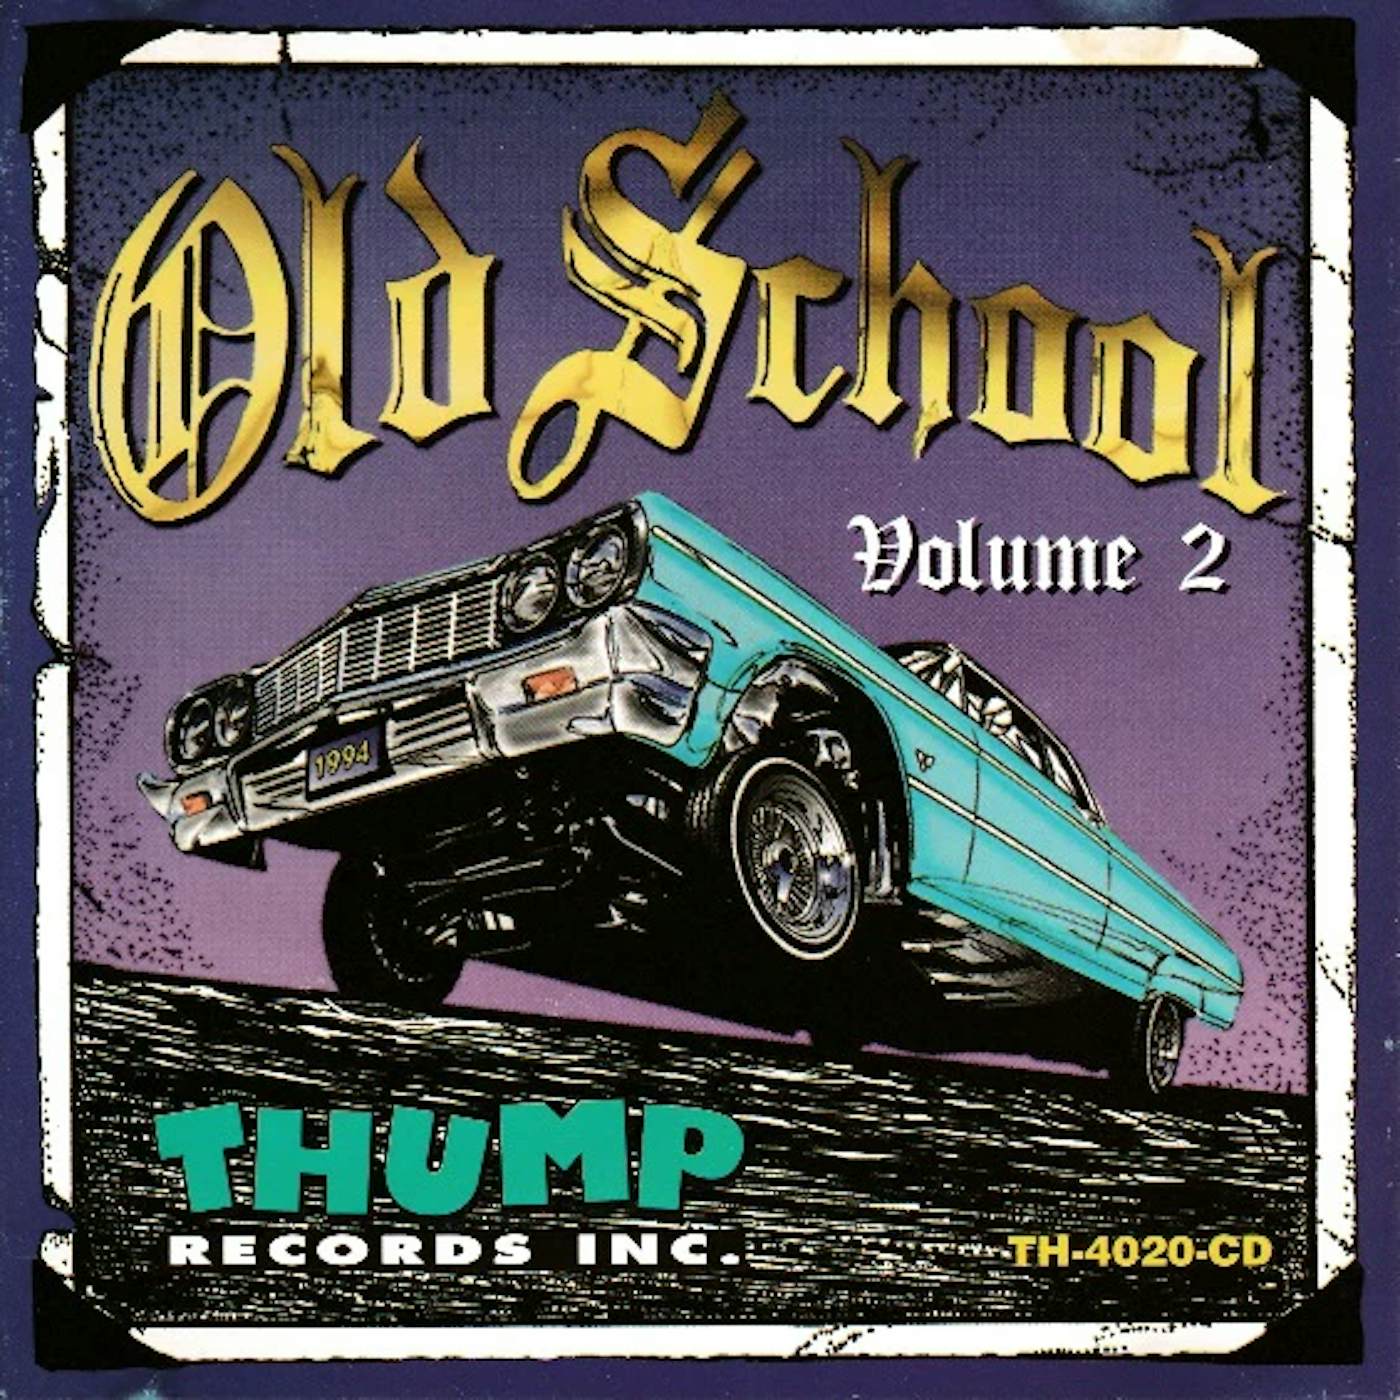 OLD SCHOOL 2 Vinyl Record